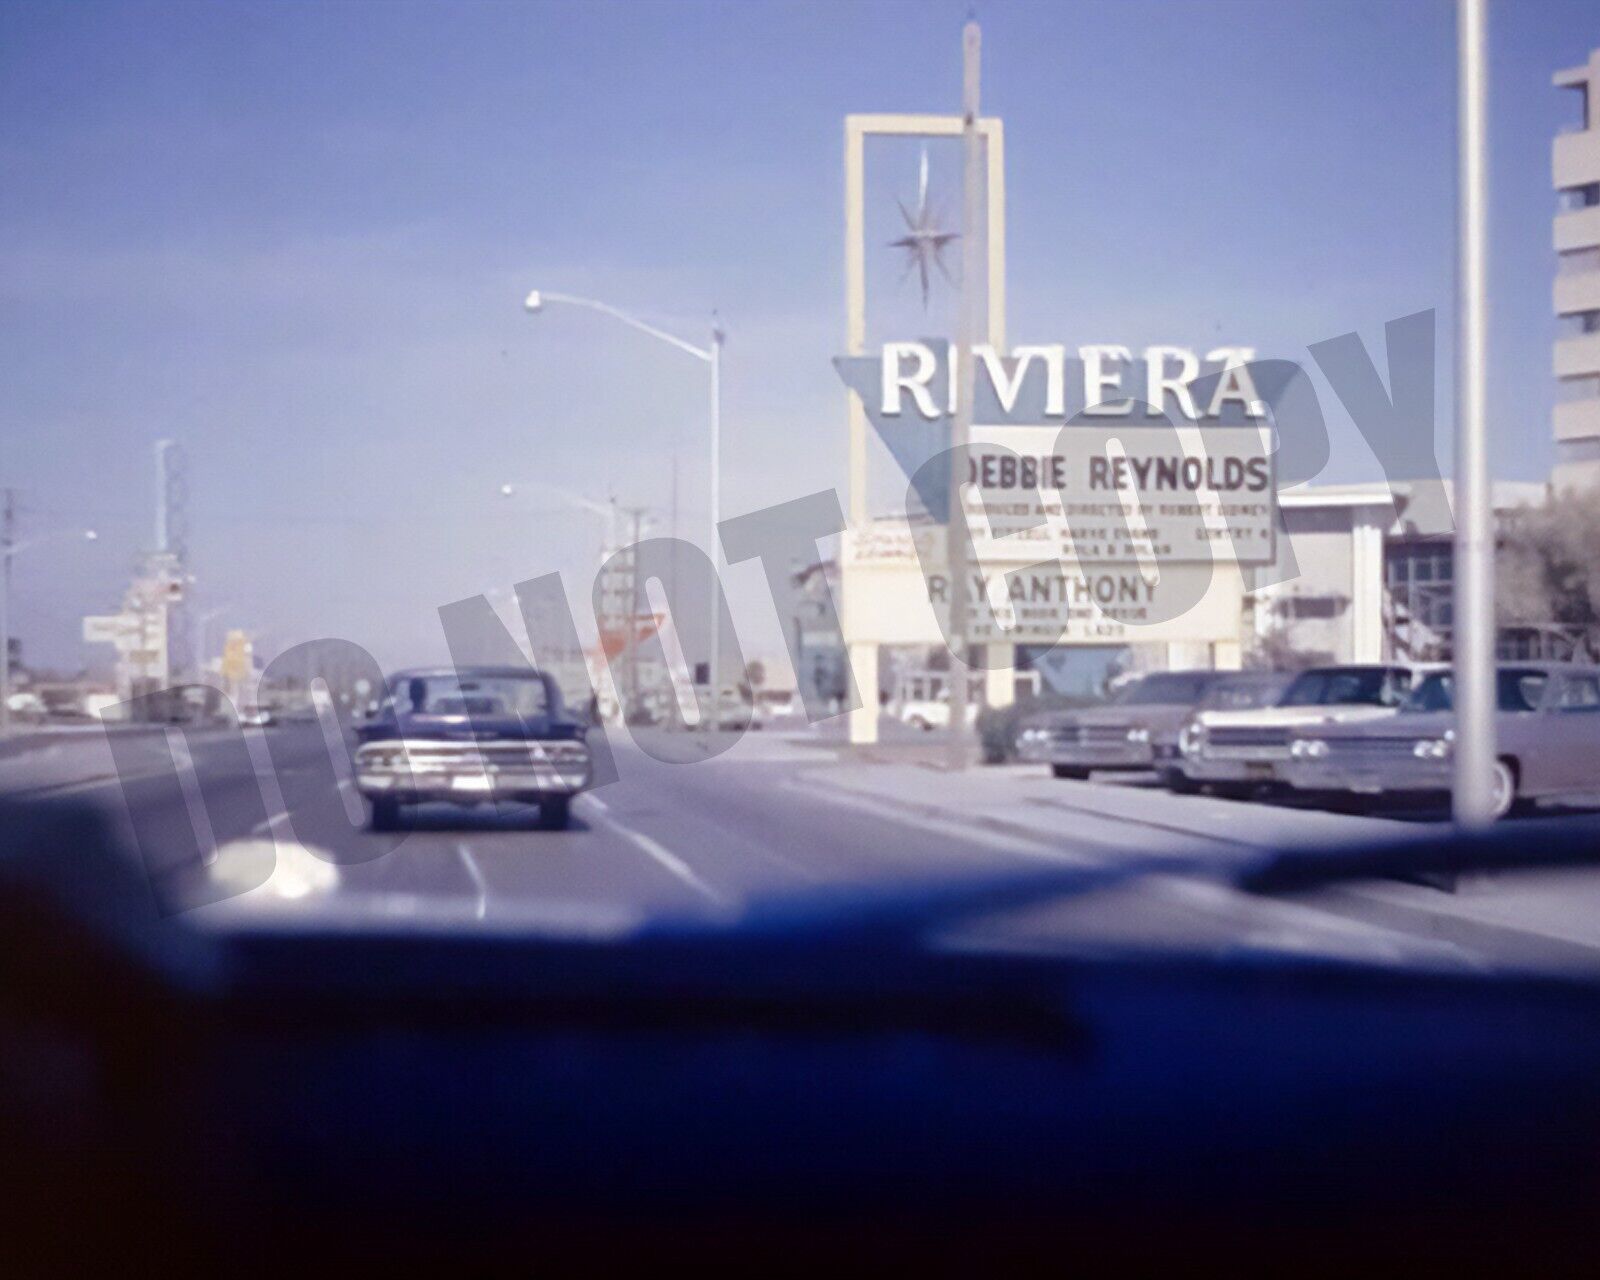 1960s Debbie Reynolds Las Vegas Riviera Hotel Casino Marque From Car 8x10 Photo